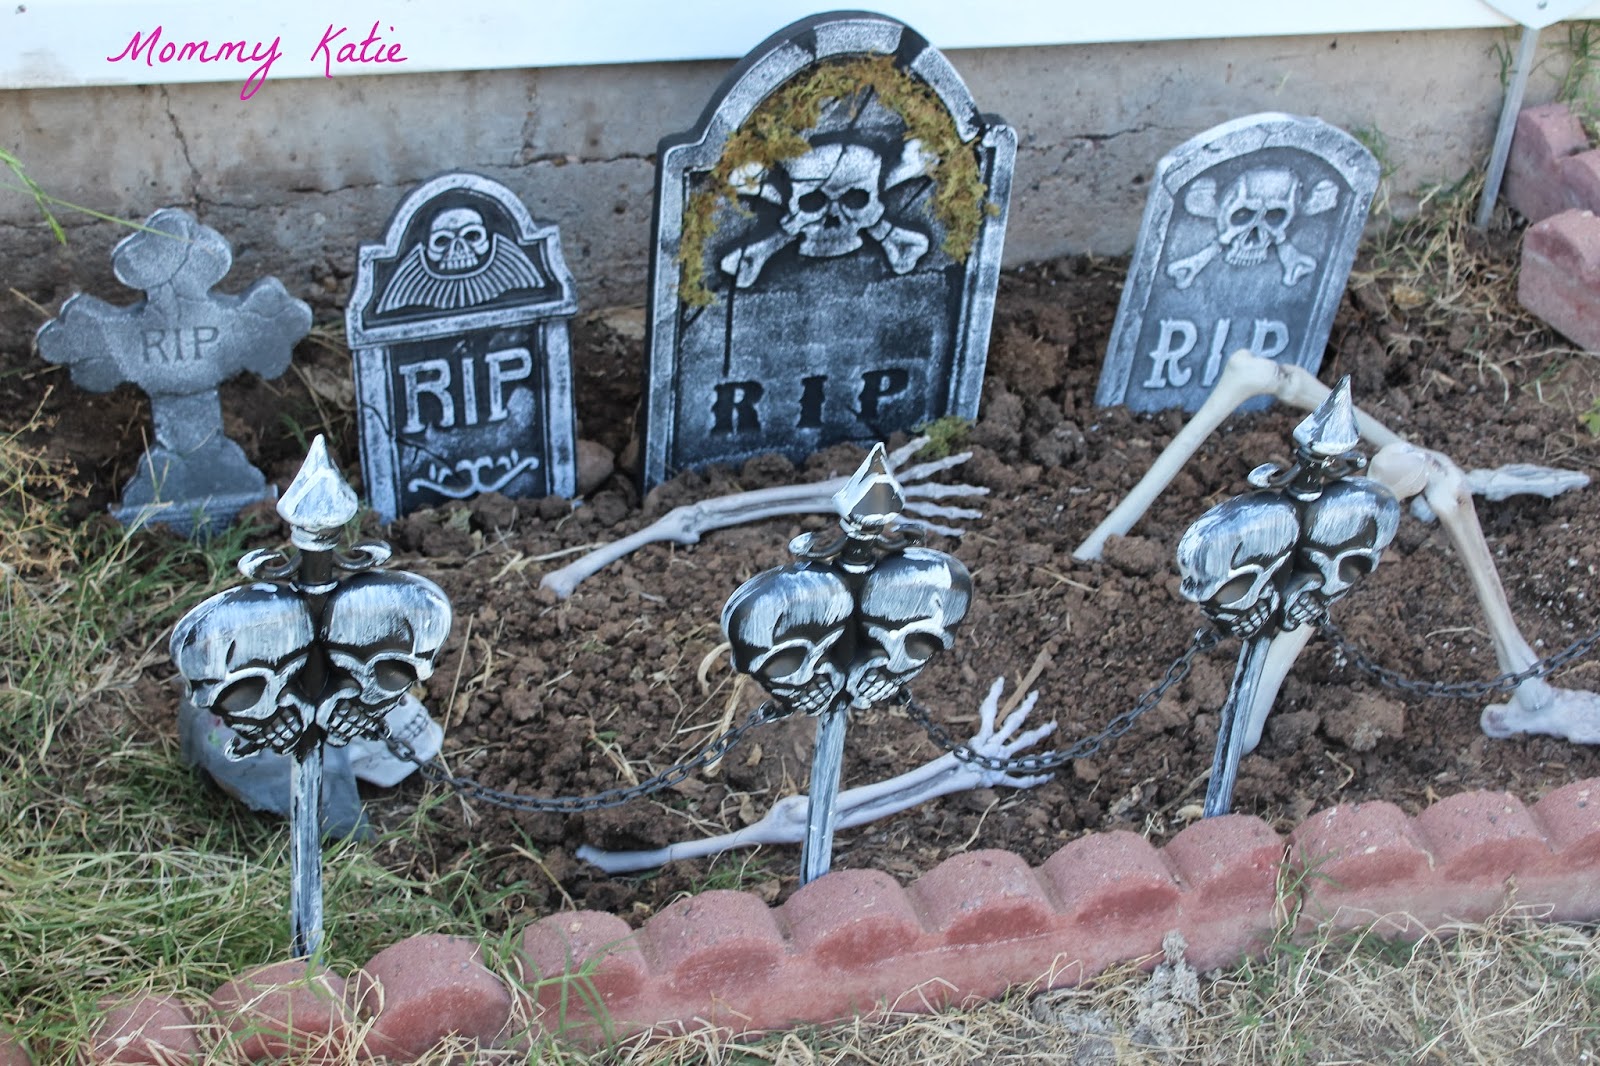 Set Up Your Haunt With Spirit Halloween Mommy Katie - skeleton roblox artho dinosaur